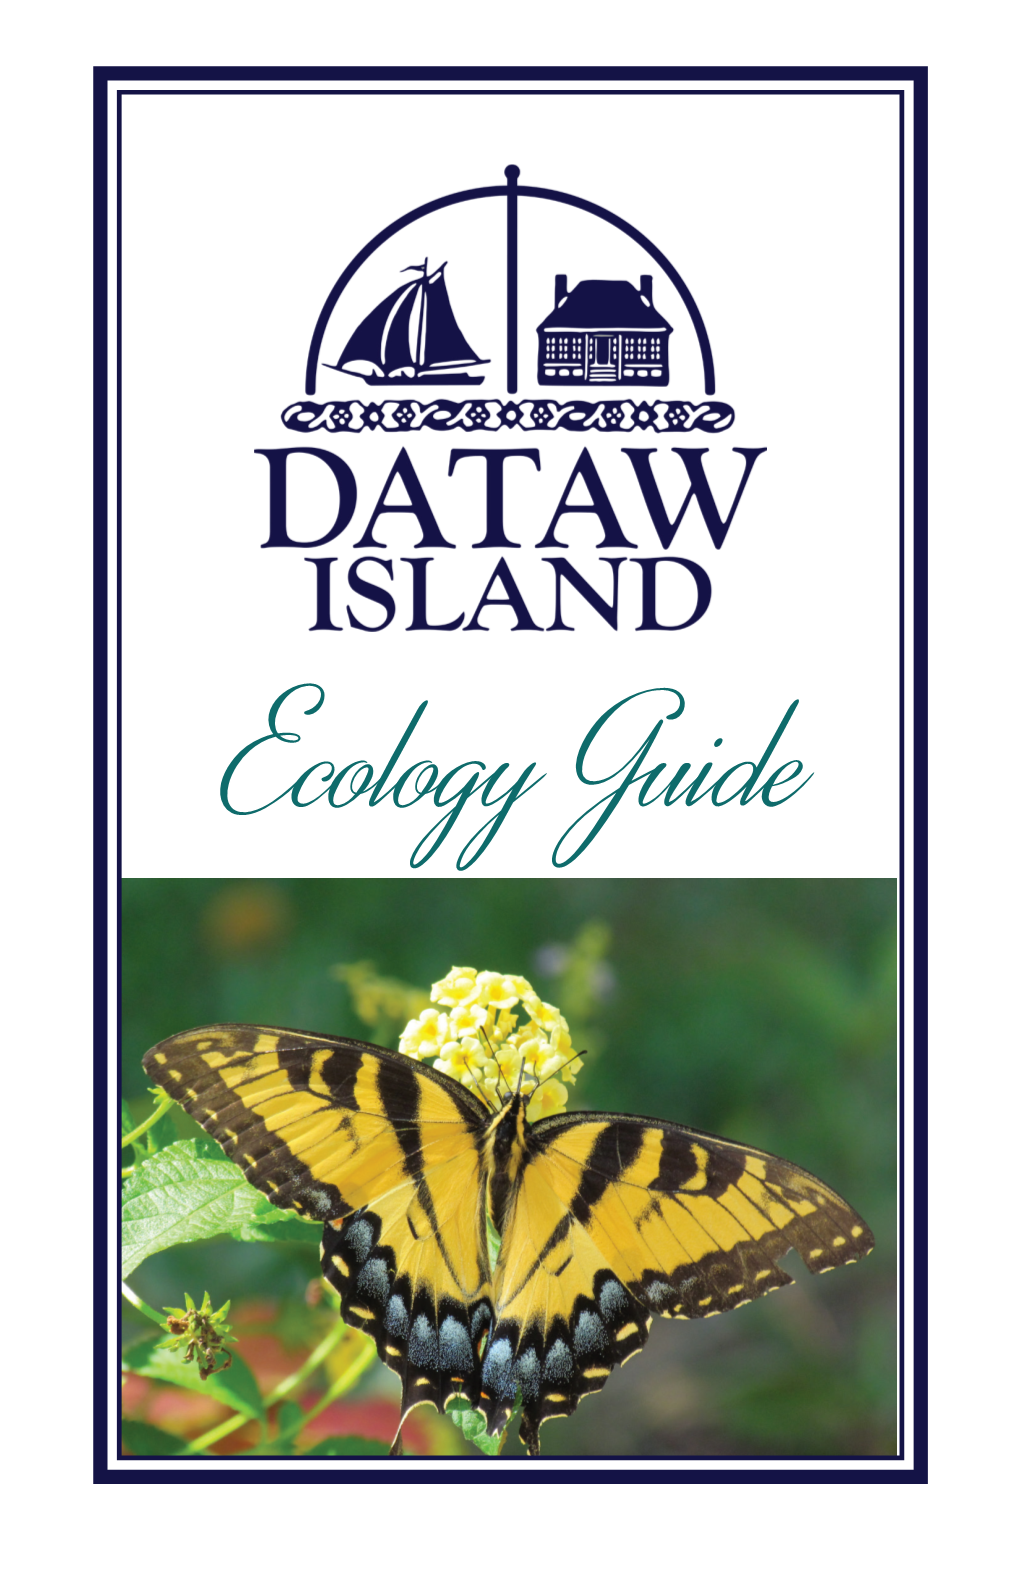 The Dataw Island Conservancy Invites Members To